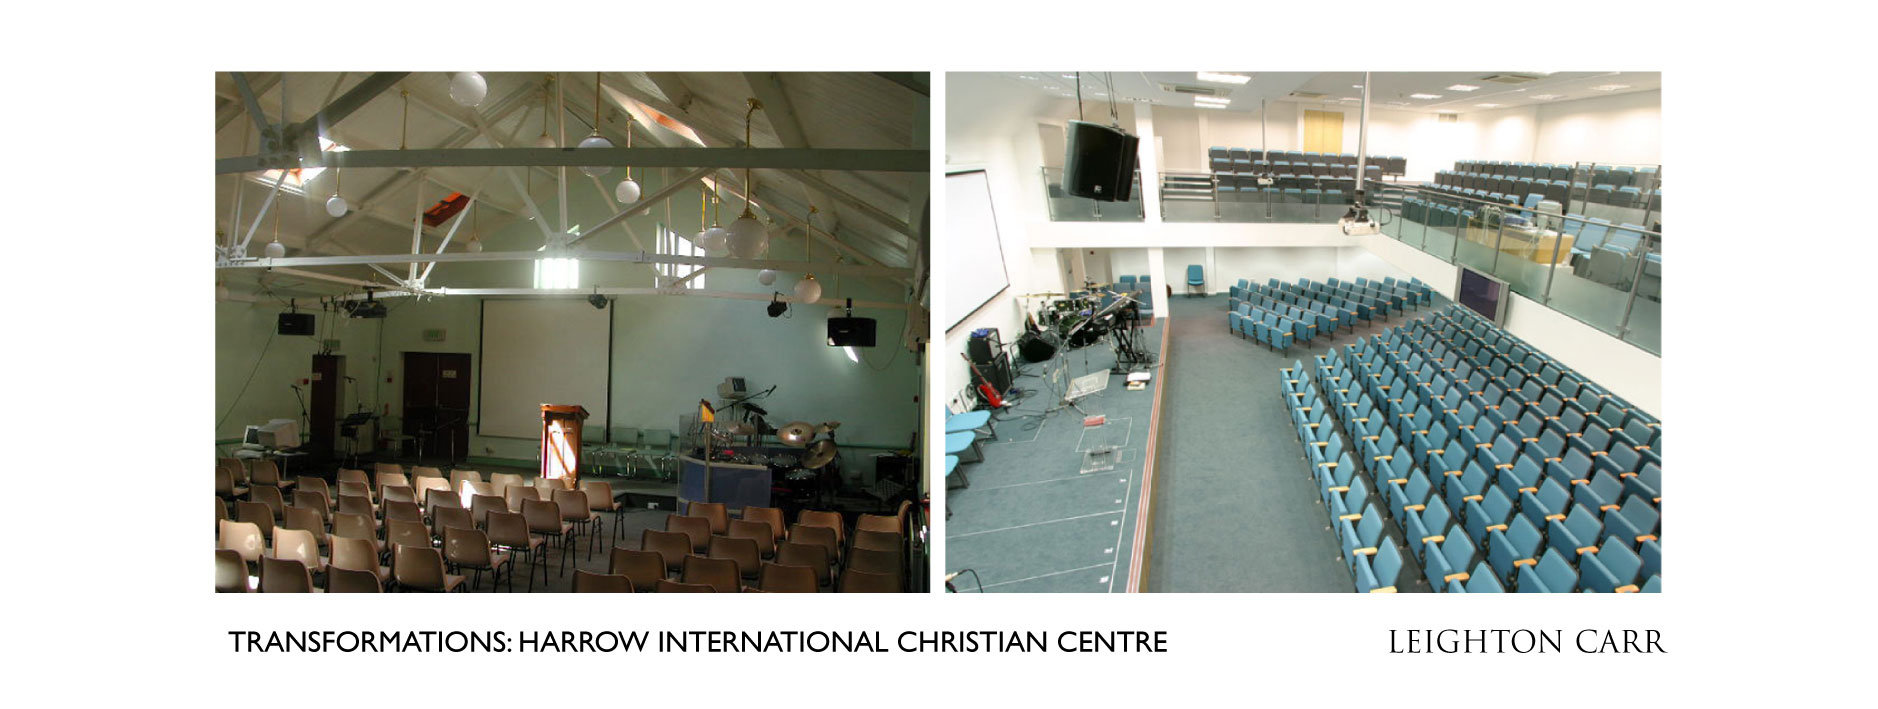 Harrow International Christian Centre